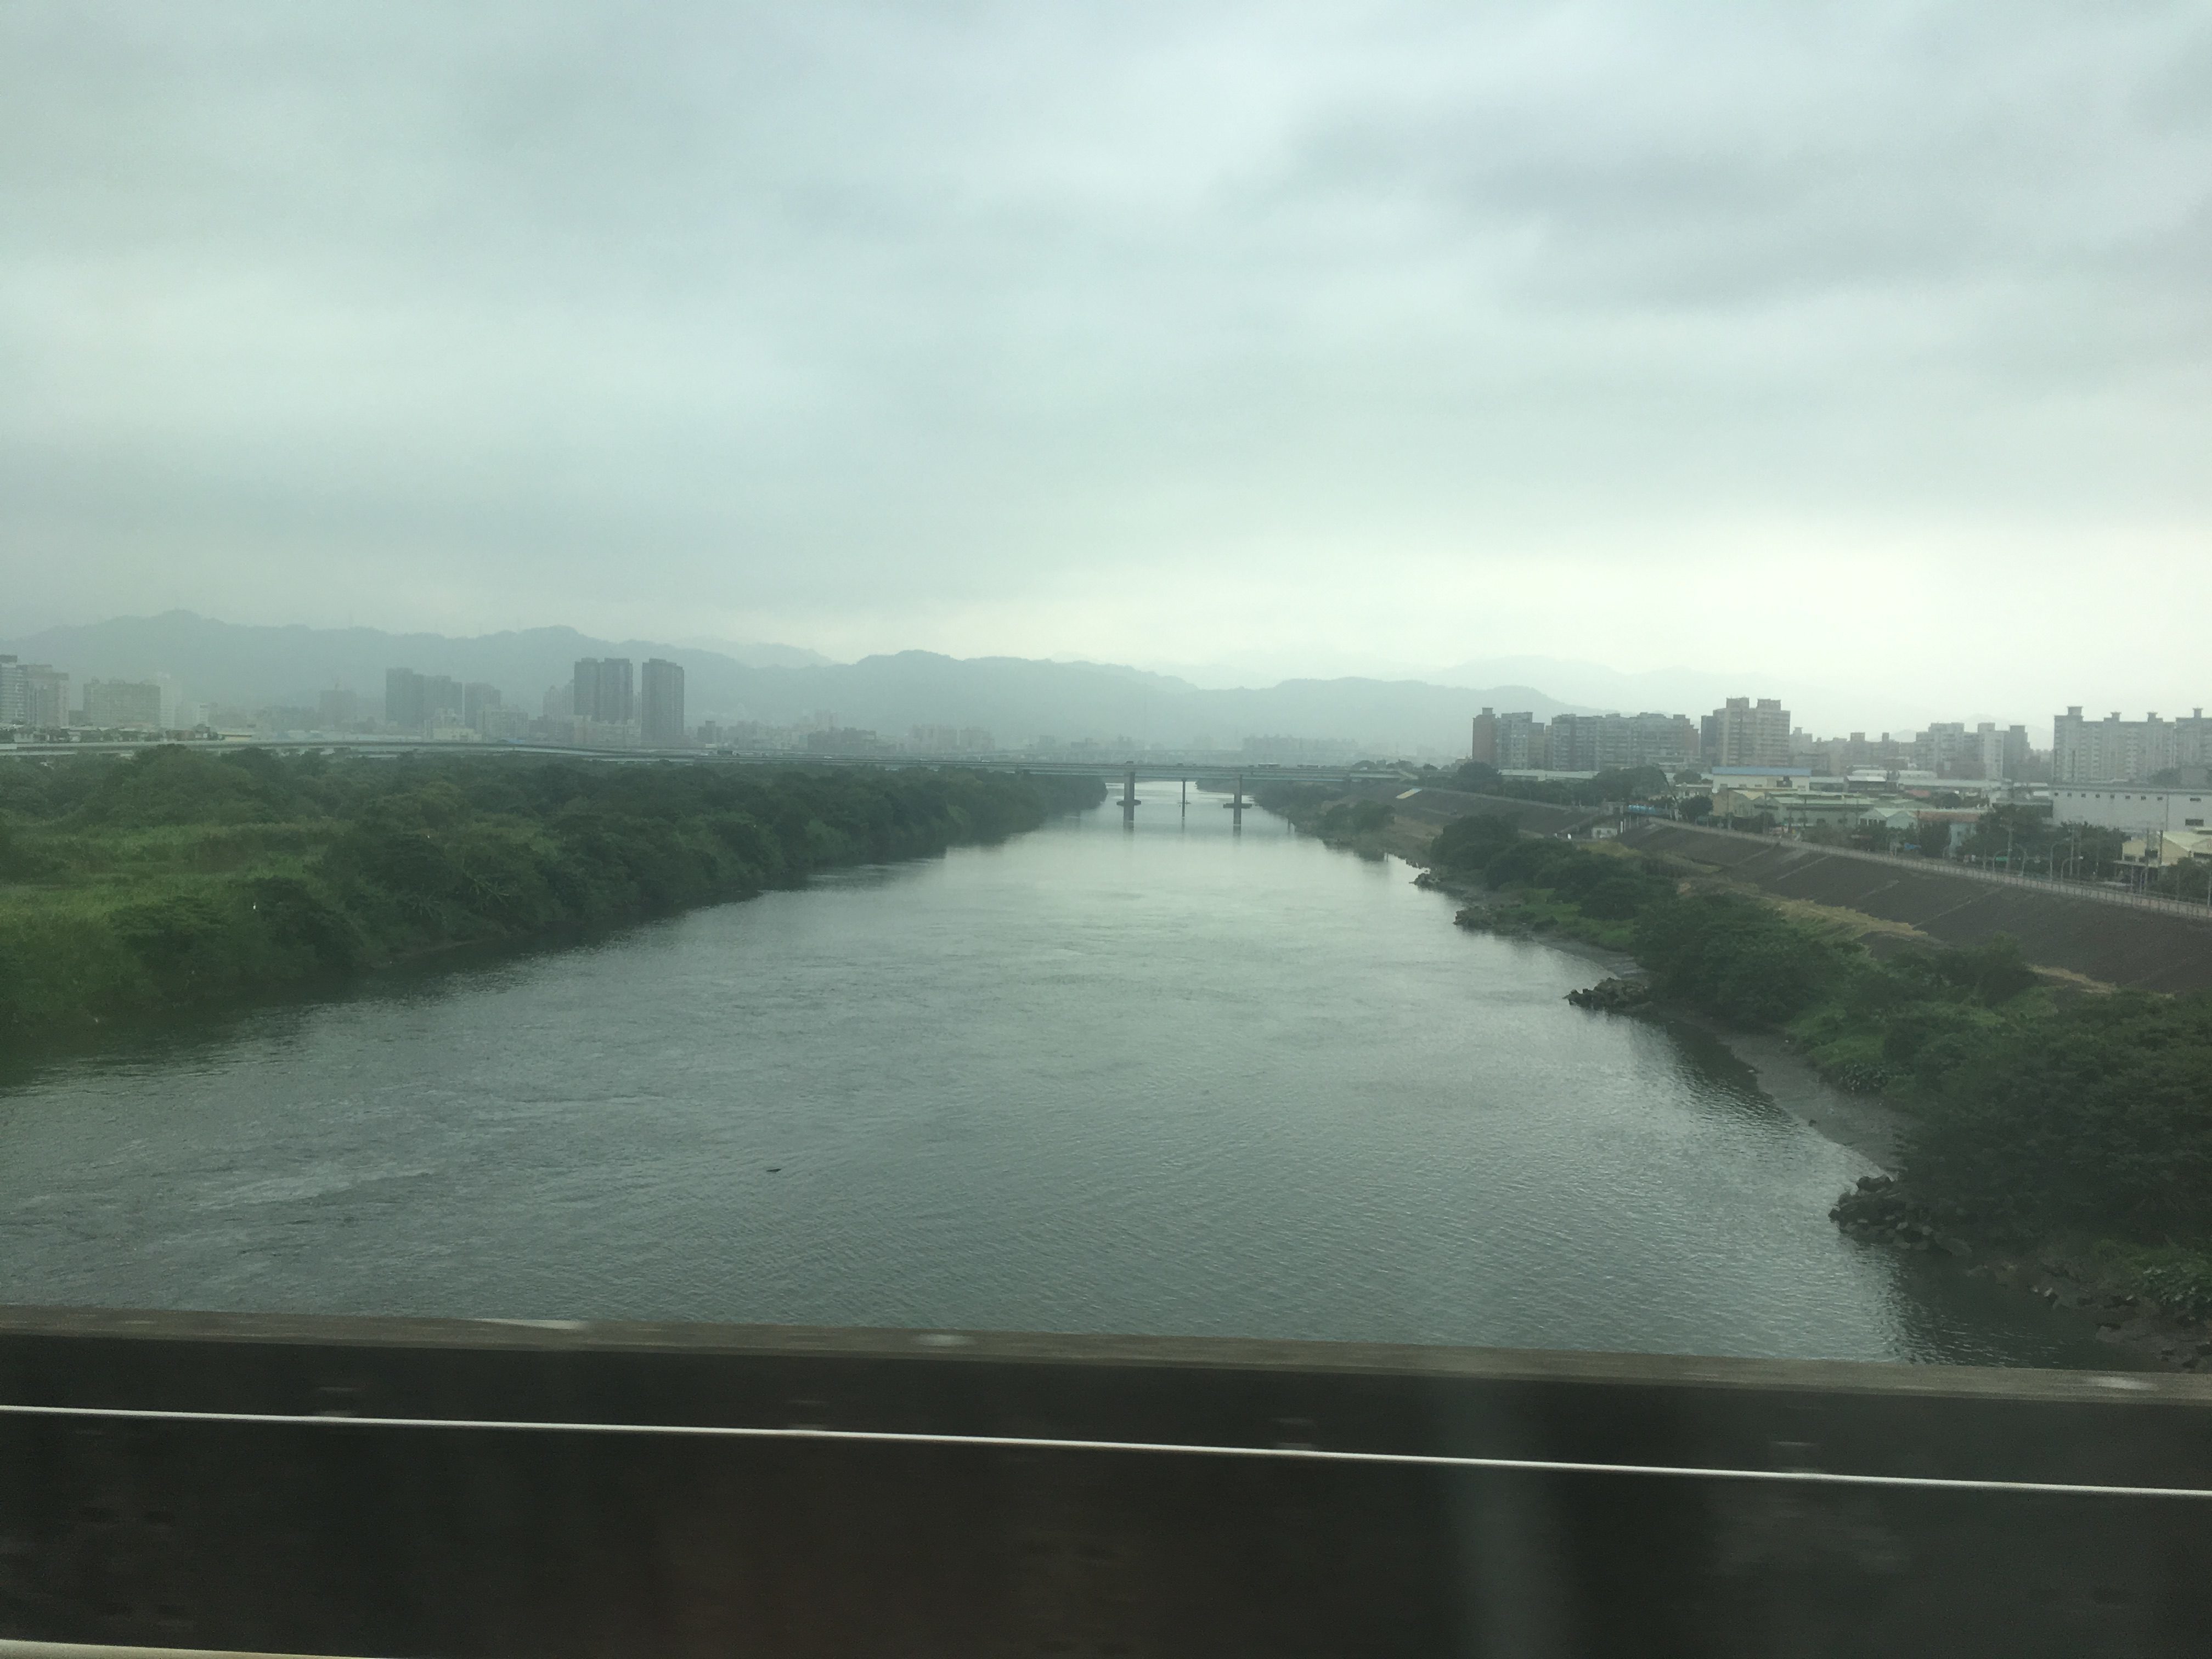 Leaving Taipei on the fast train